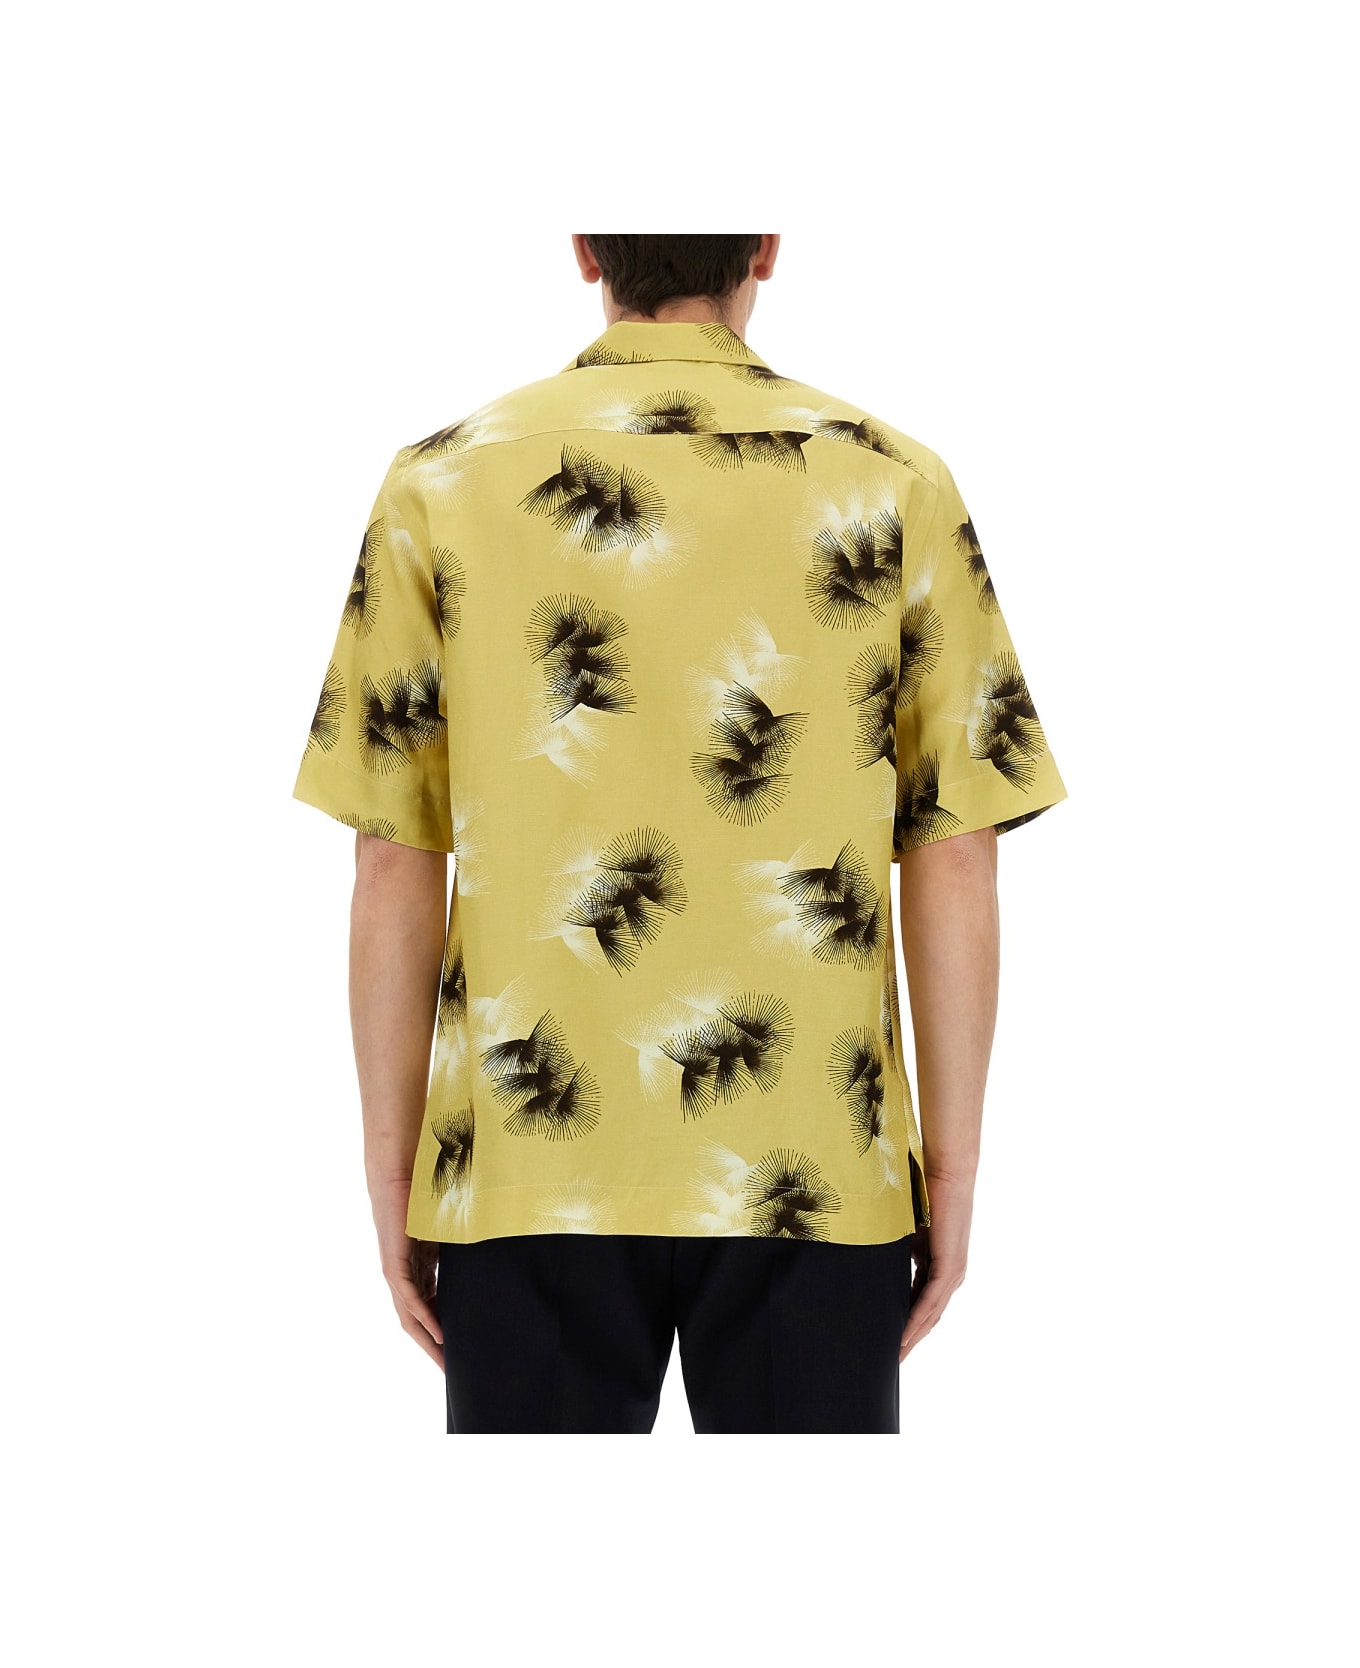 Paul Smith Shirts - YELLOW シャツ